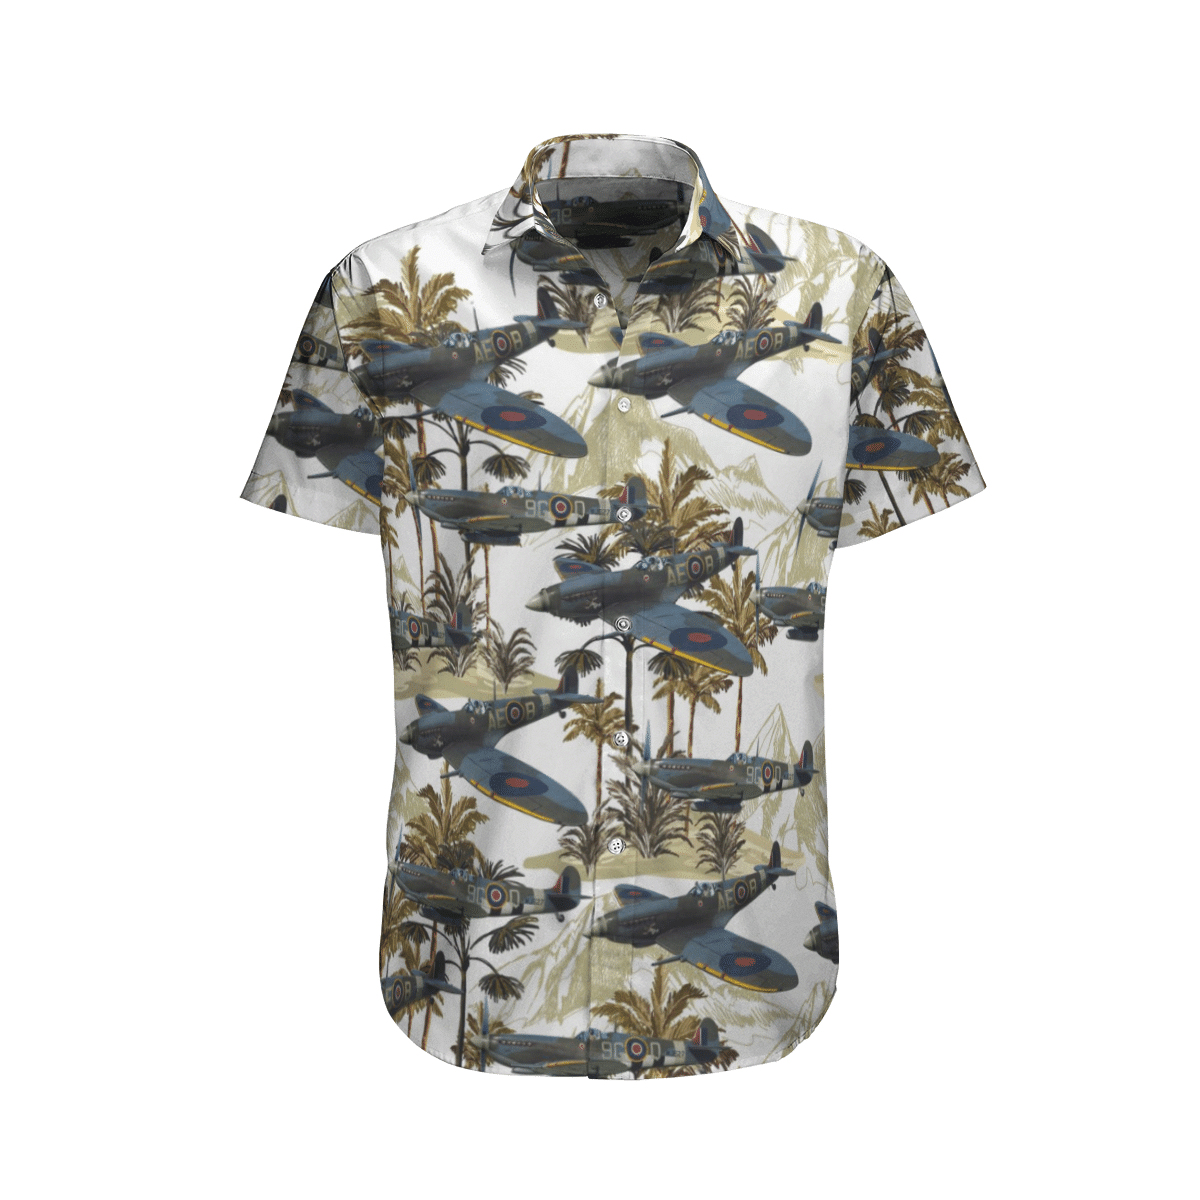 Get a new Hawaiian shirt to enjoy summer vacation 72